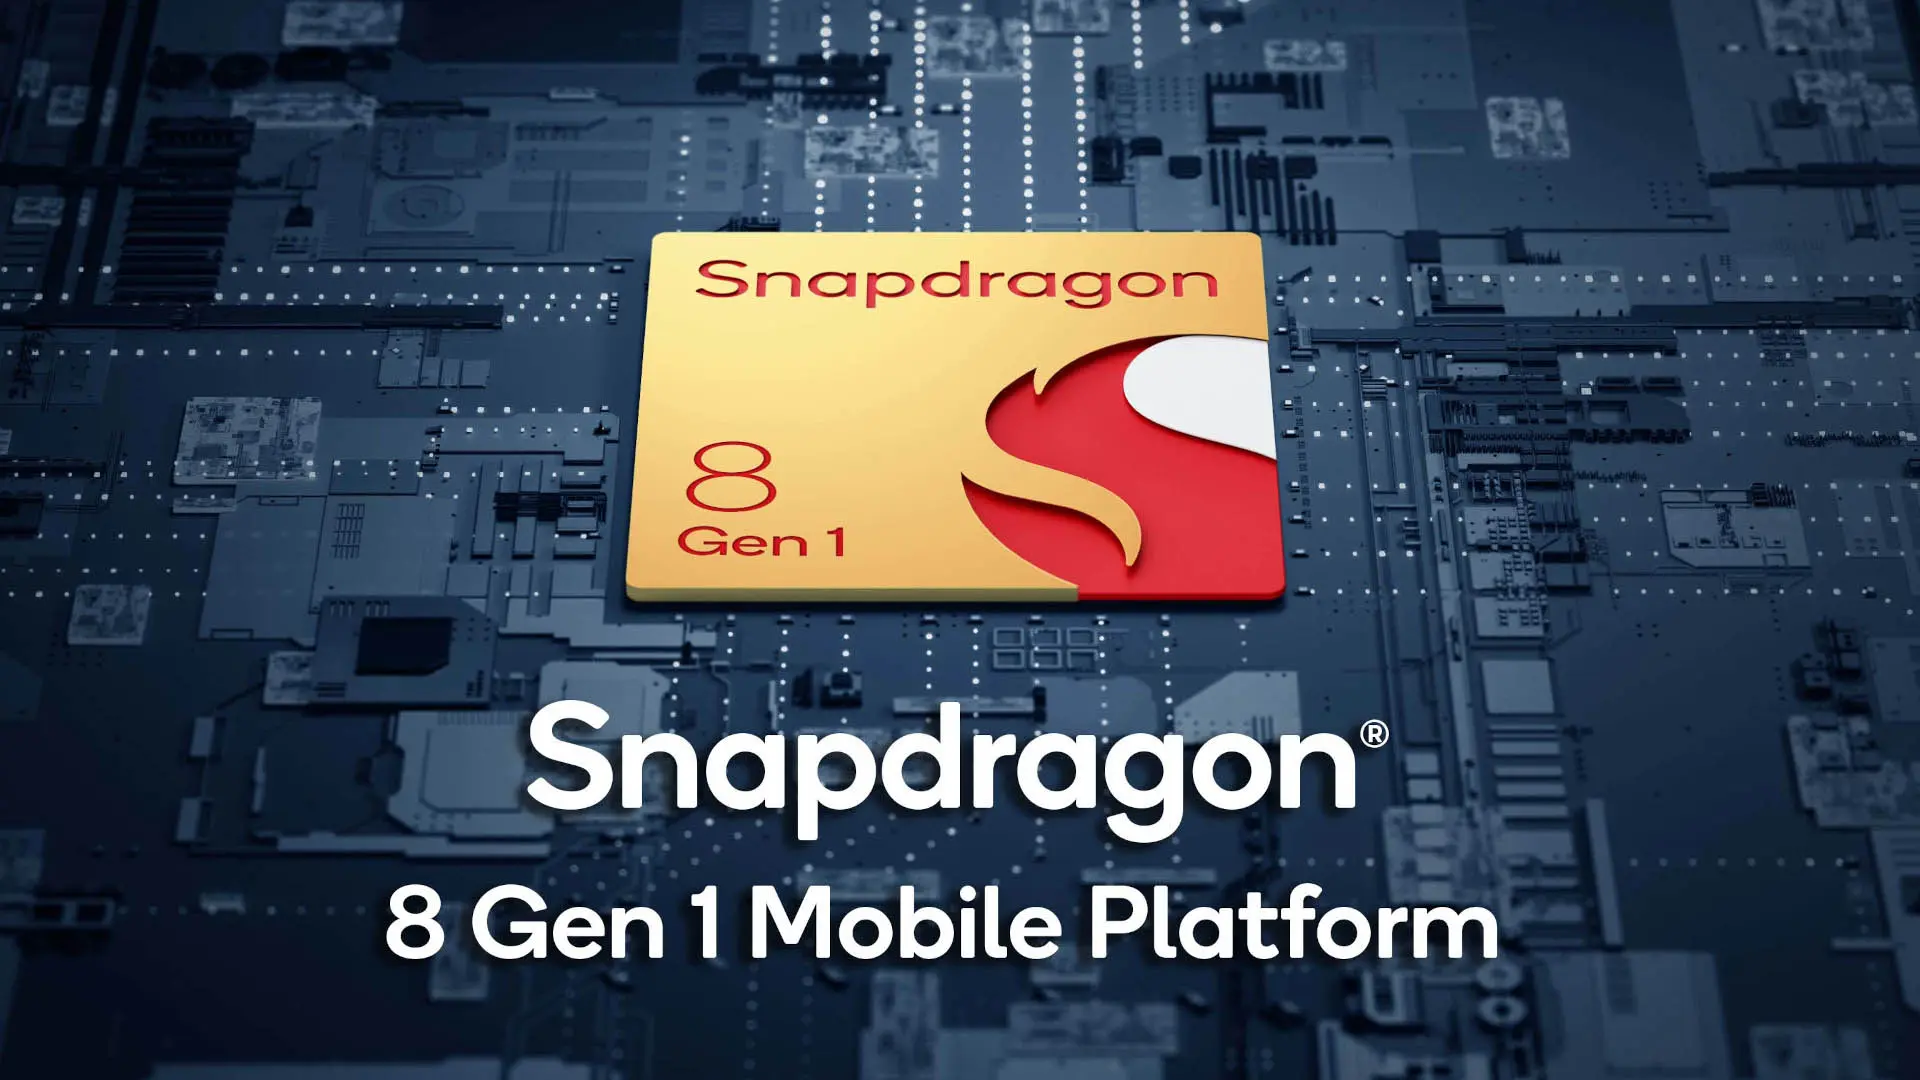 Imagem para ilustrar o processador Snapdragon 8 gen1